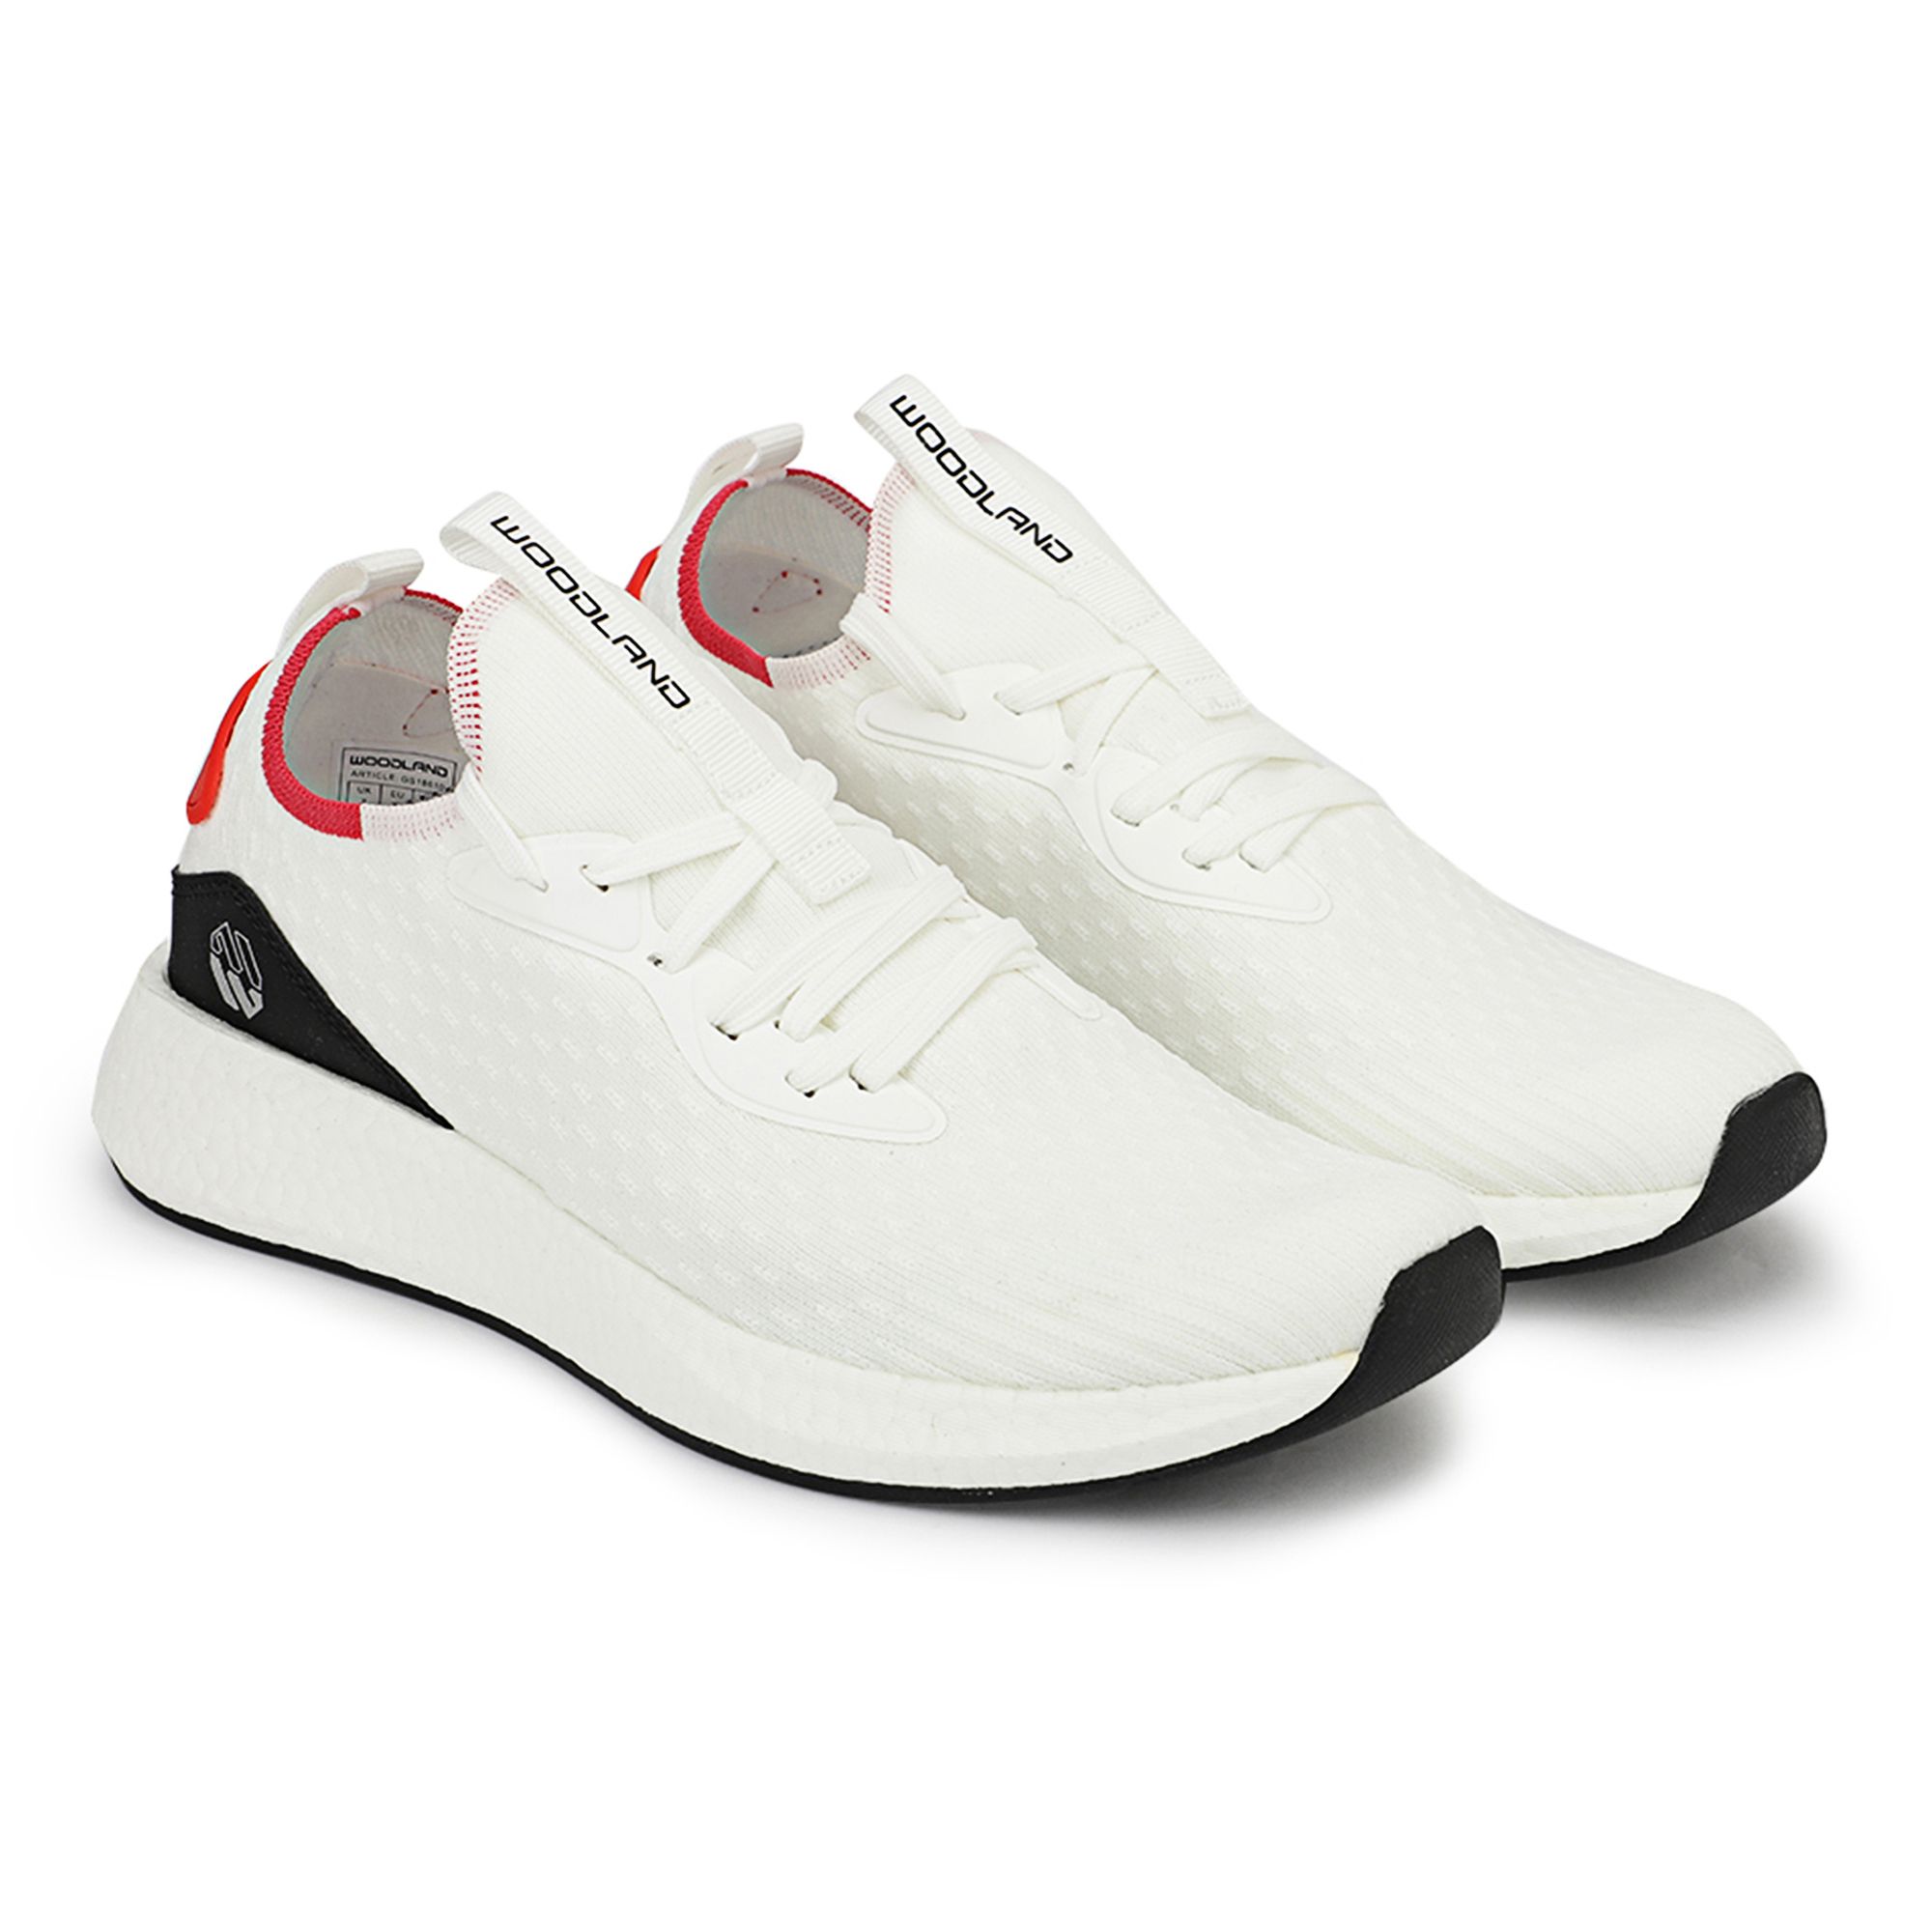 White Sports Shoe for Men